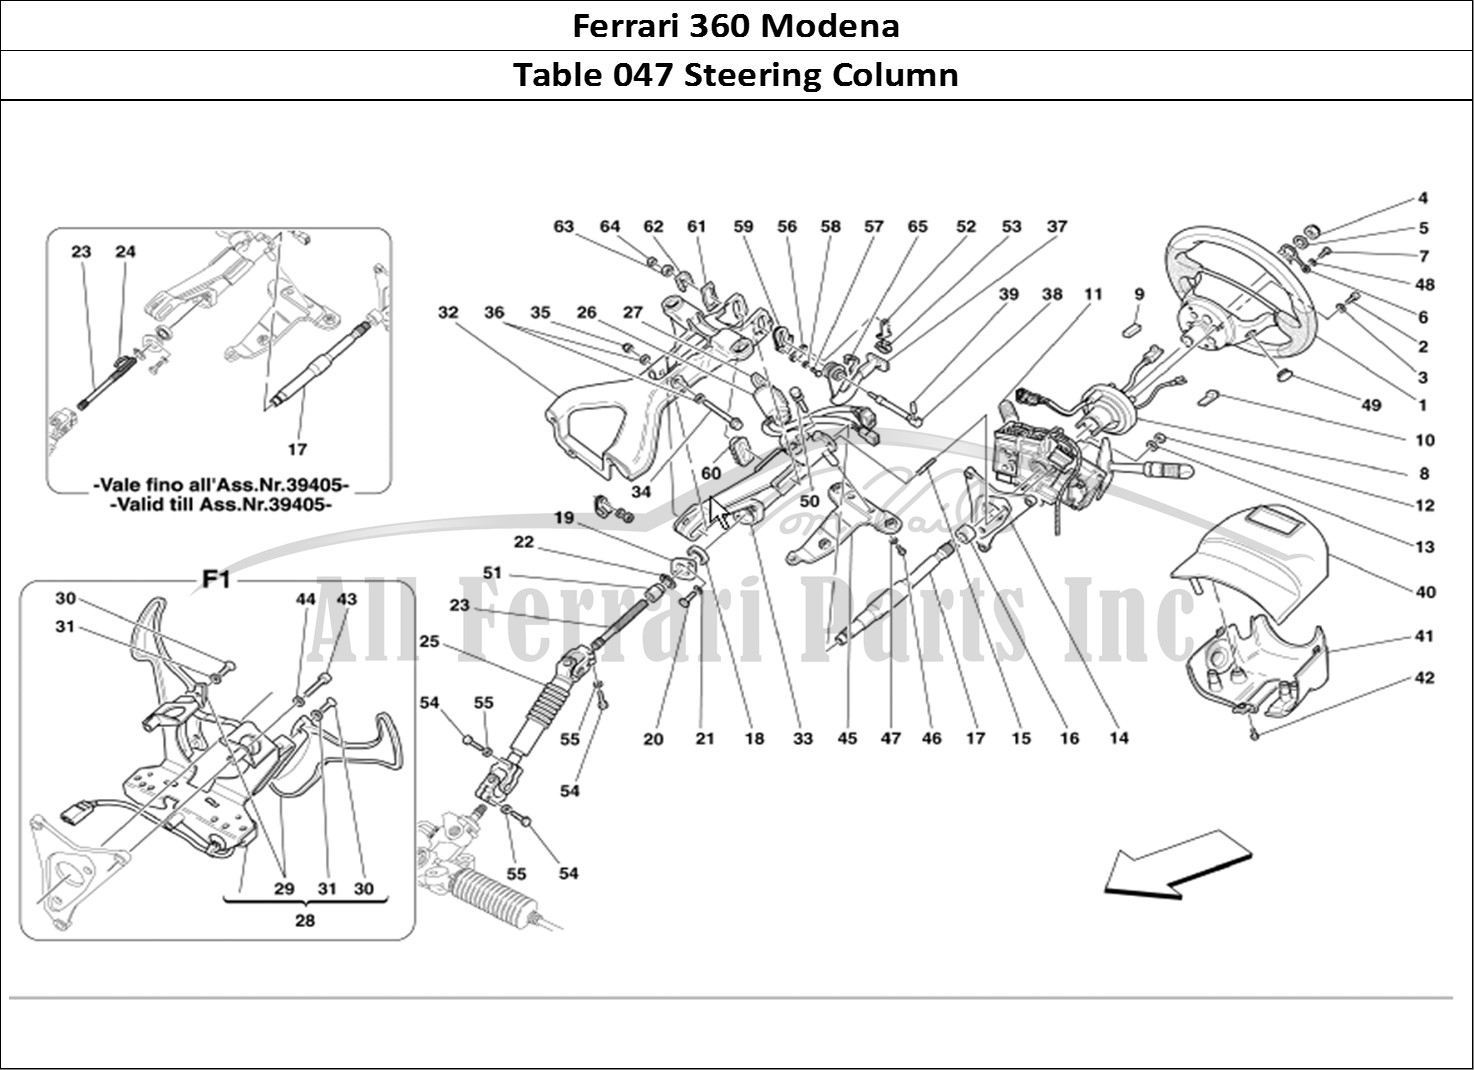 Ferrari Parts Ferrari 360 Modena Page 047 Steering Column